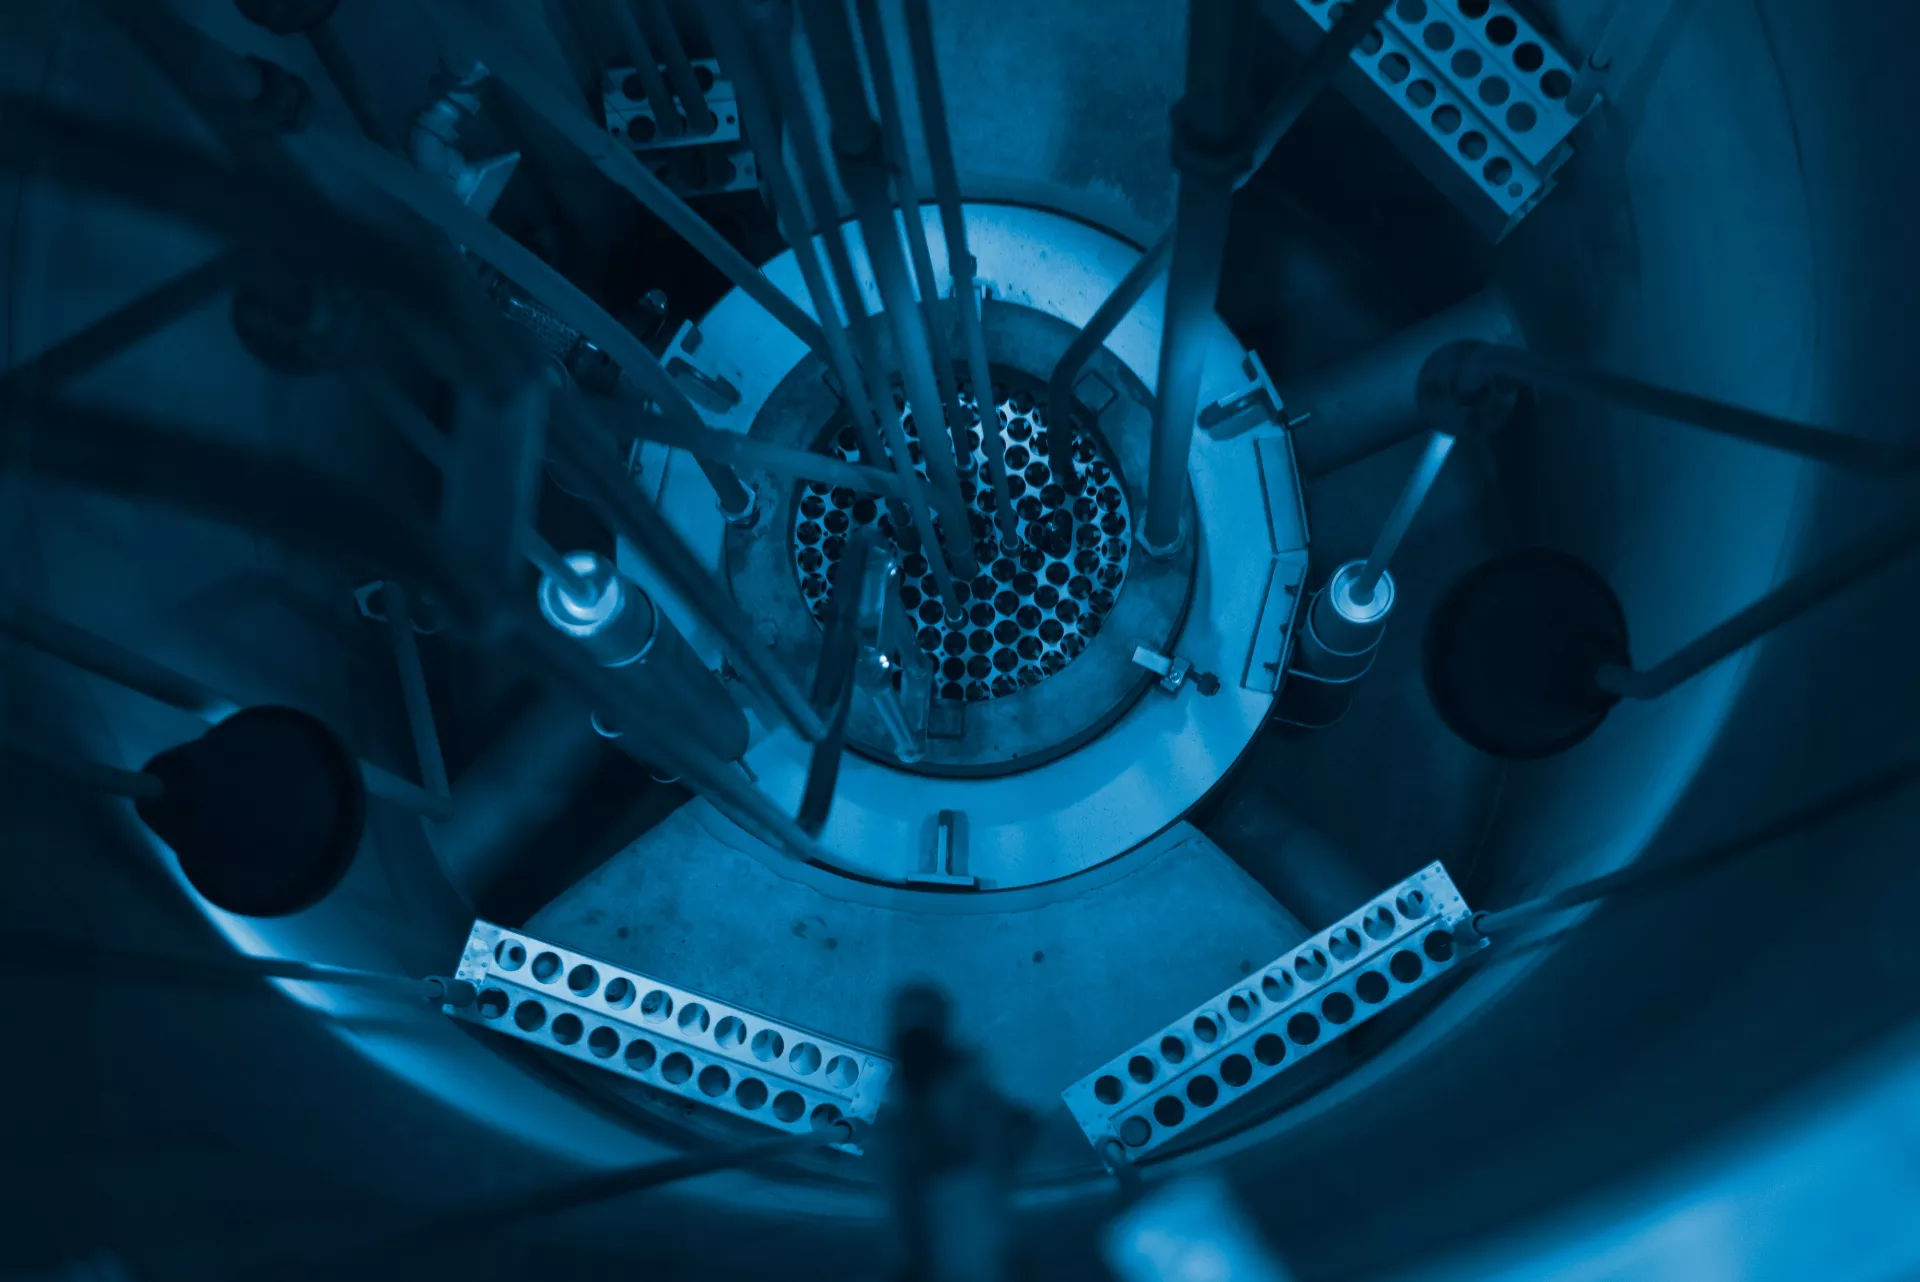 Inside of a reactor.